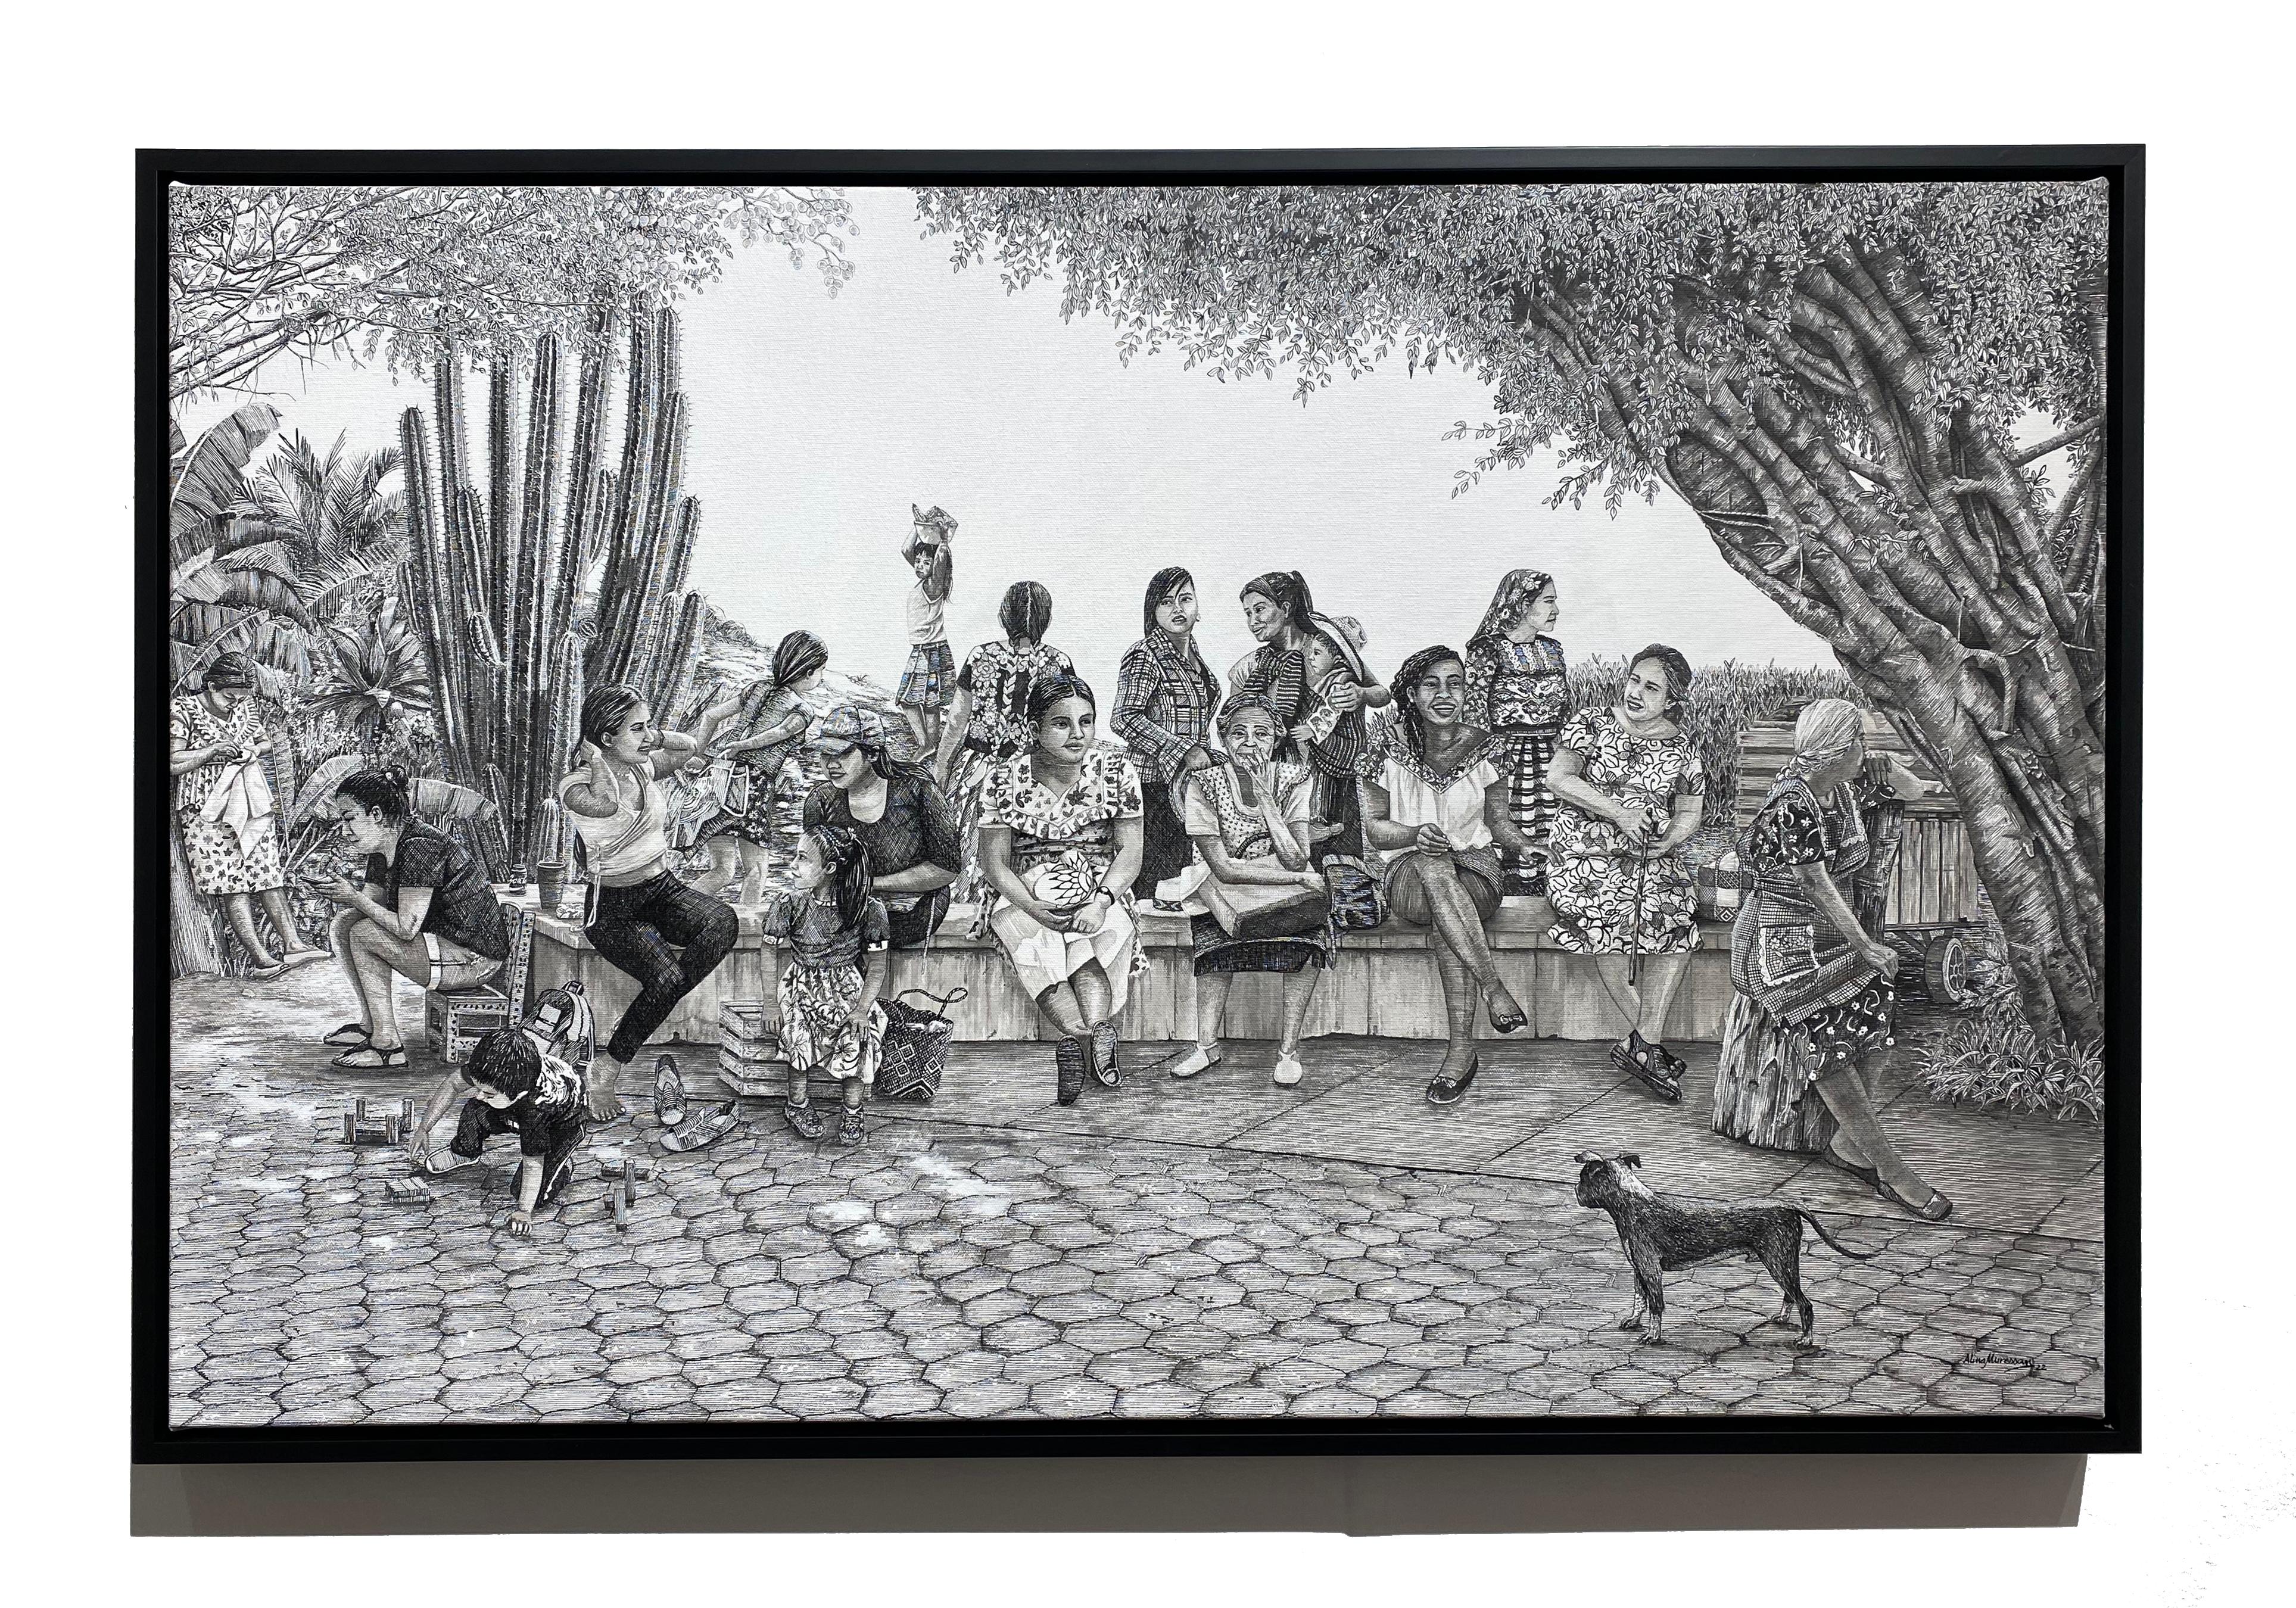 Mujeres de Oaxaca - Femmes de Oaxaca - encre contemporaine et pinceau sur toile - Painting de Alina Muressan